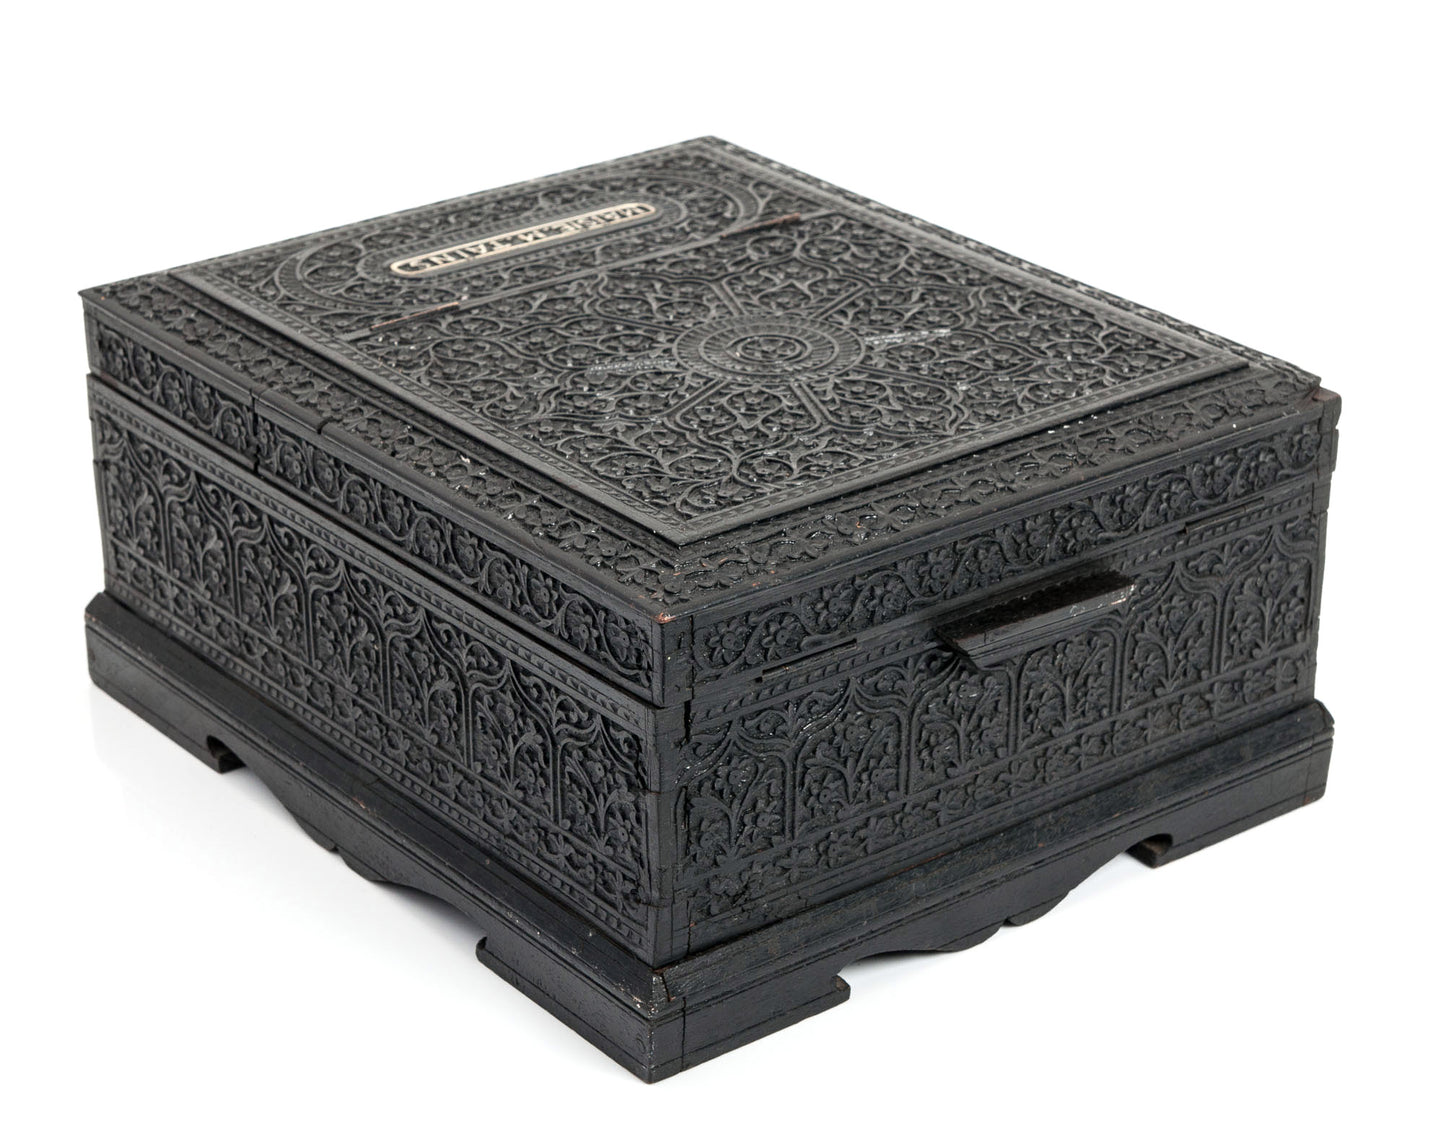 Fine Antique Nagina Carved Ebony Work Box - Indian Islamic Colonial Region (Code 0149)